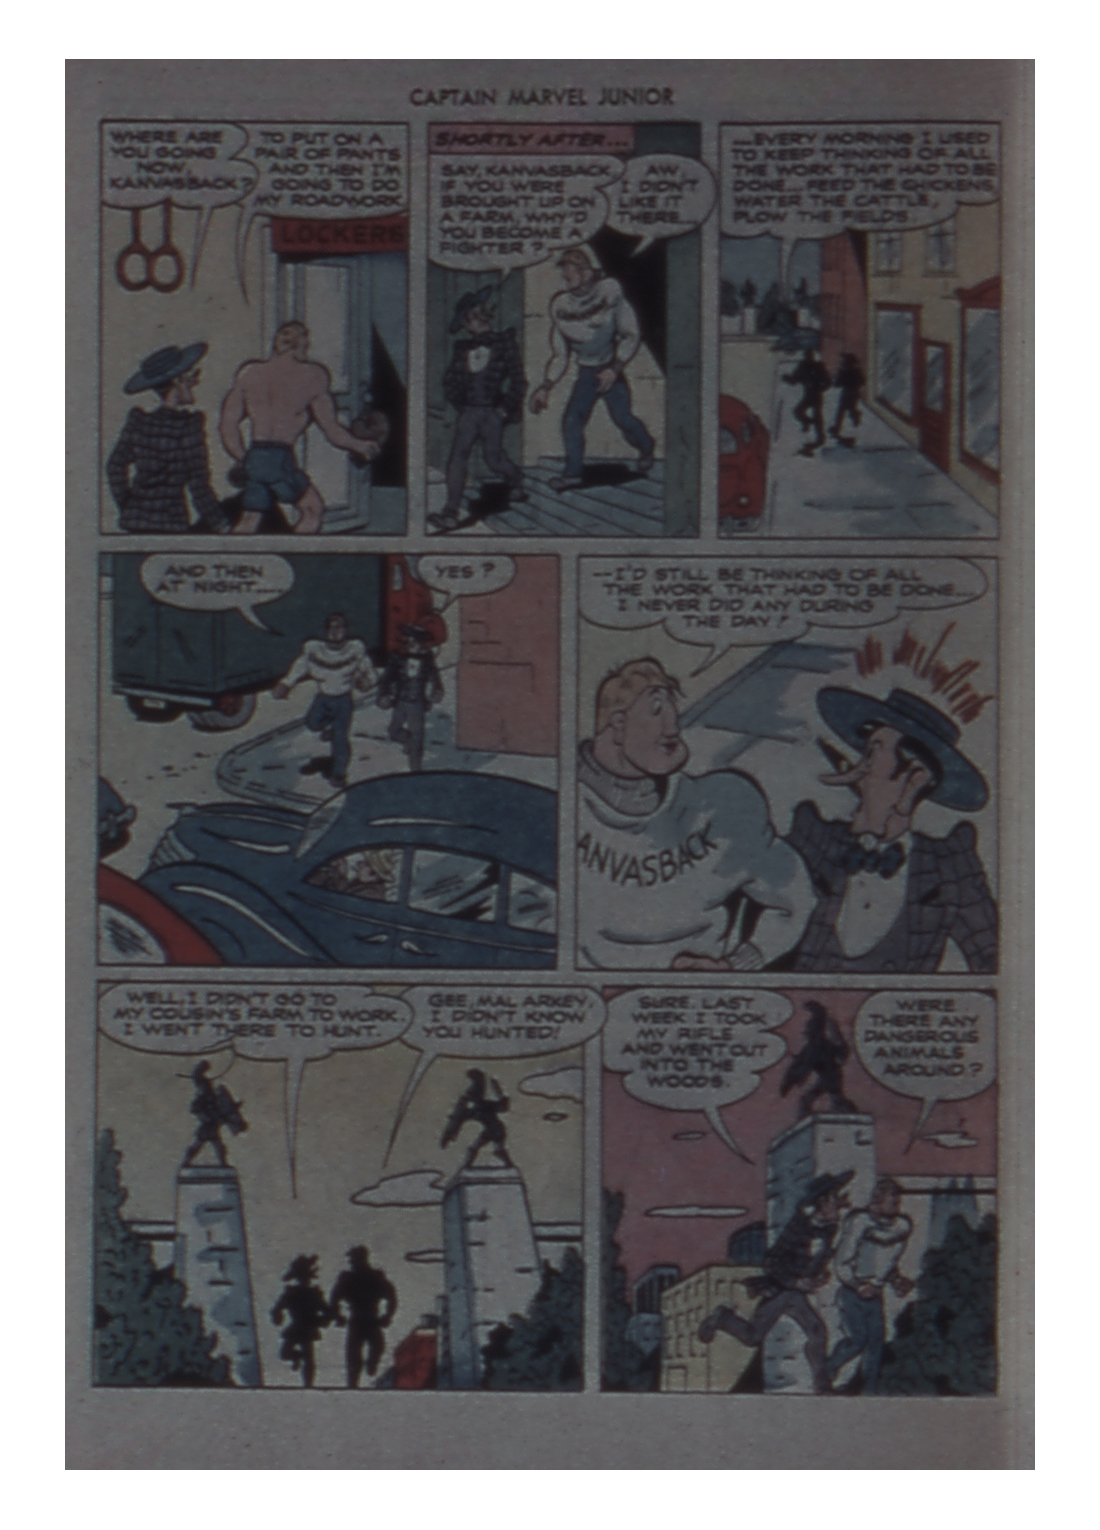 Read online Captain Marvel, Jr. comic -  Issue #63 - 36